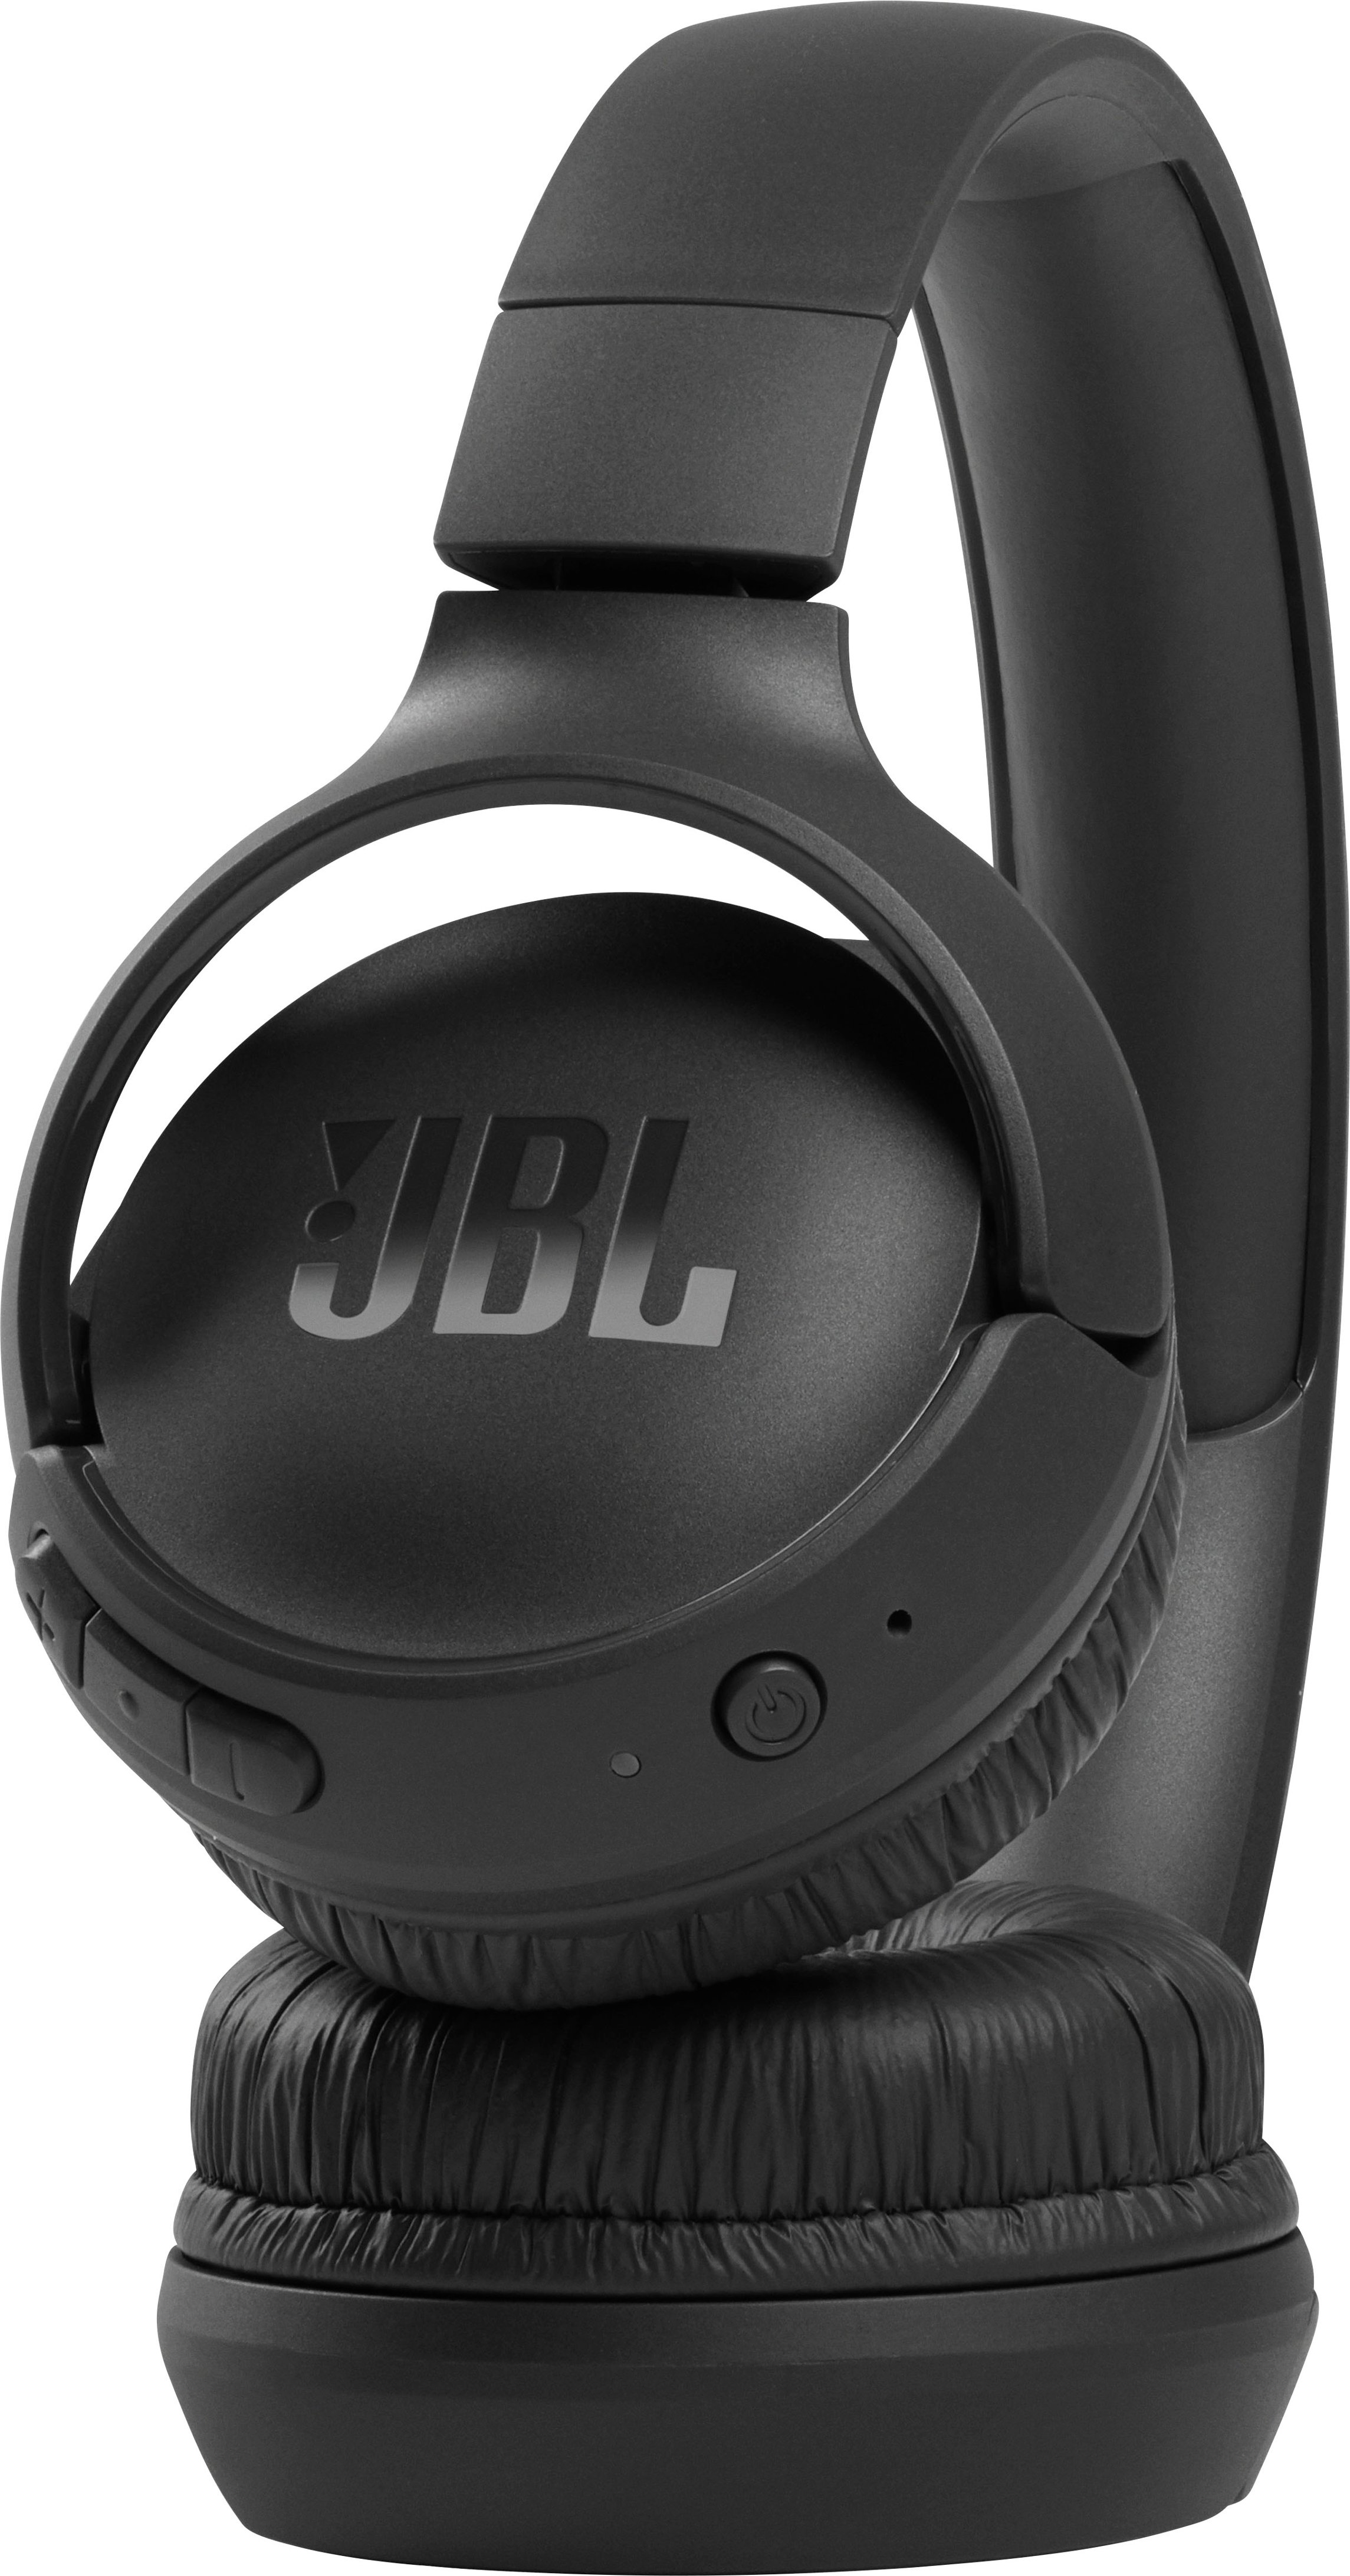 JBL Tune 520BT Bluetooth On Ear Headphones With Microphone - Black